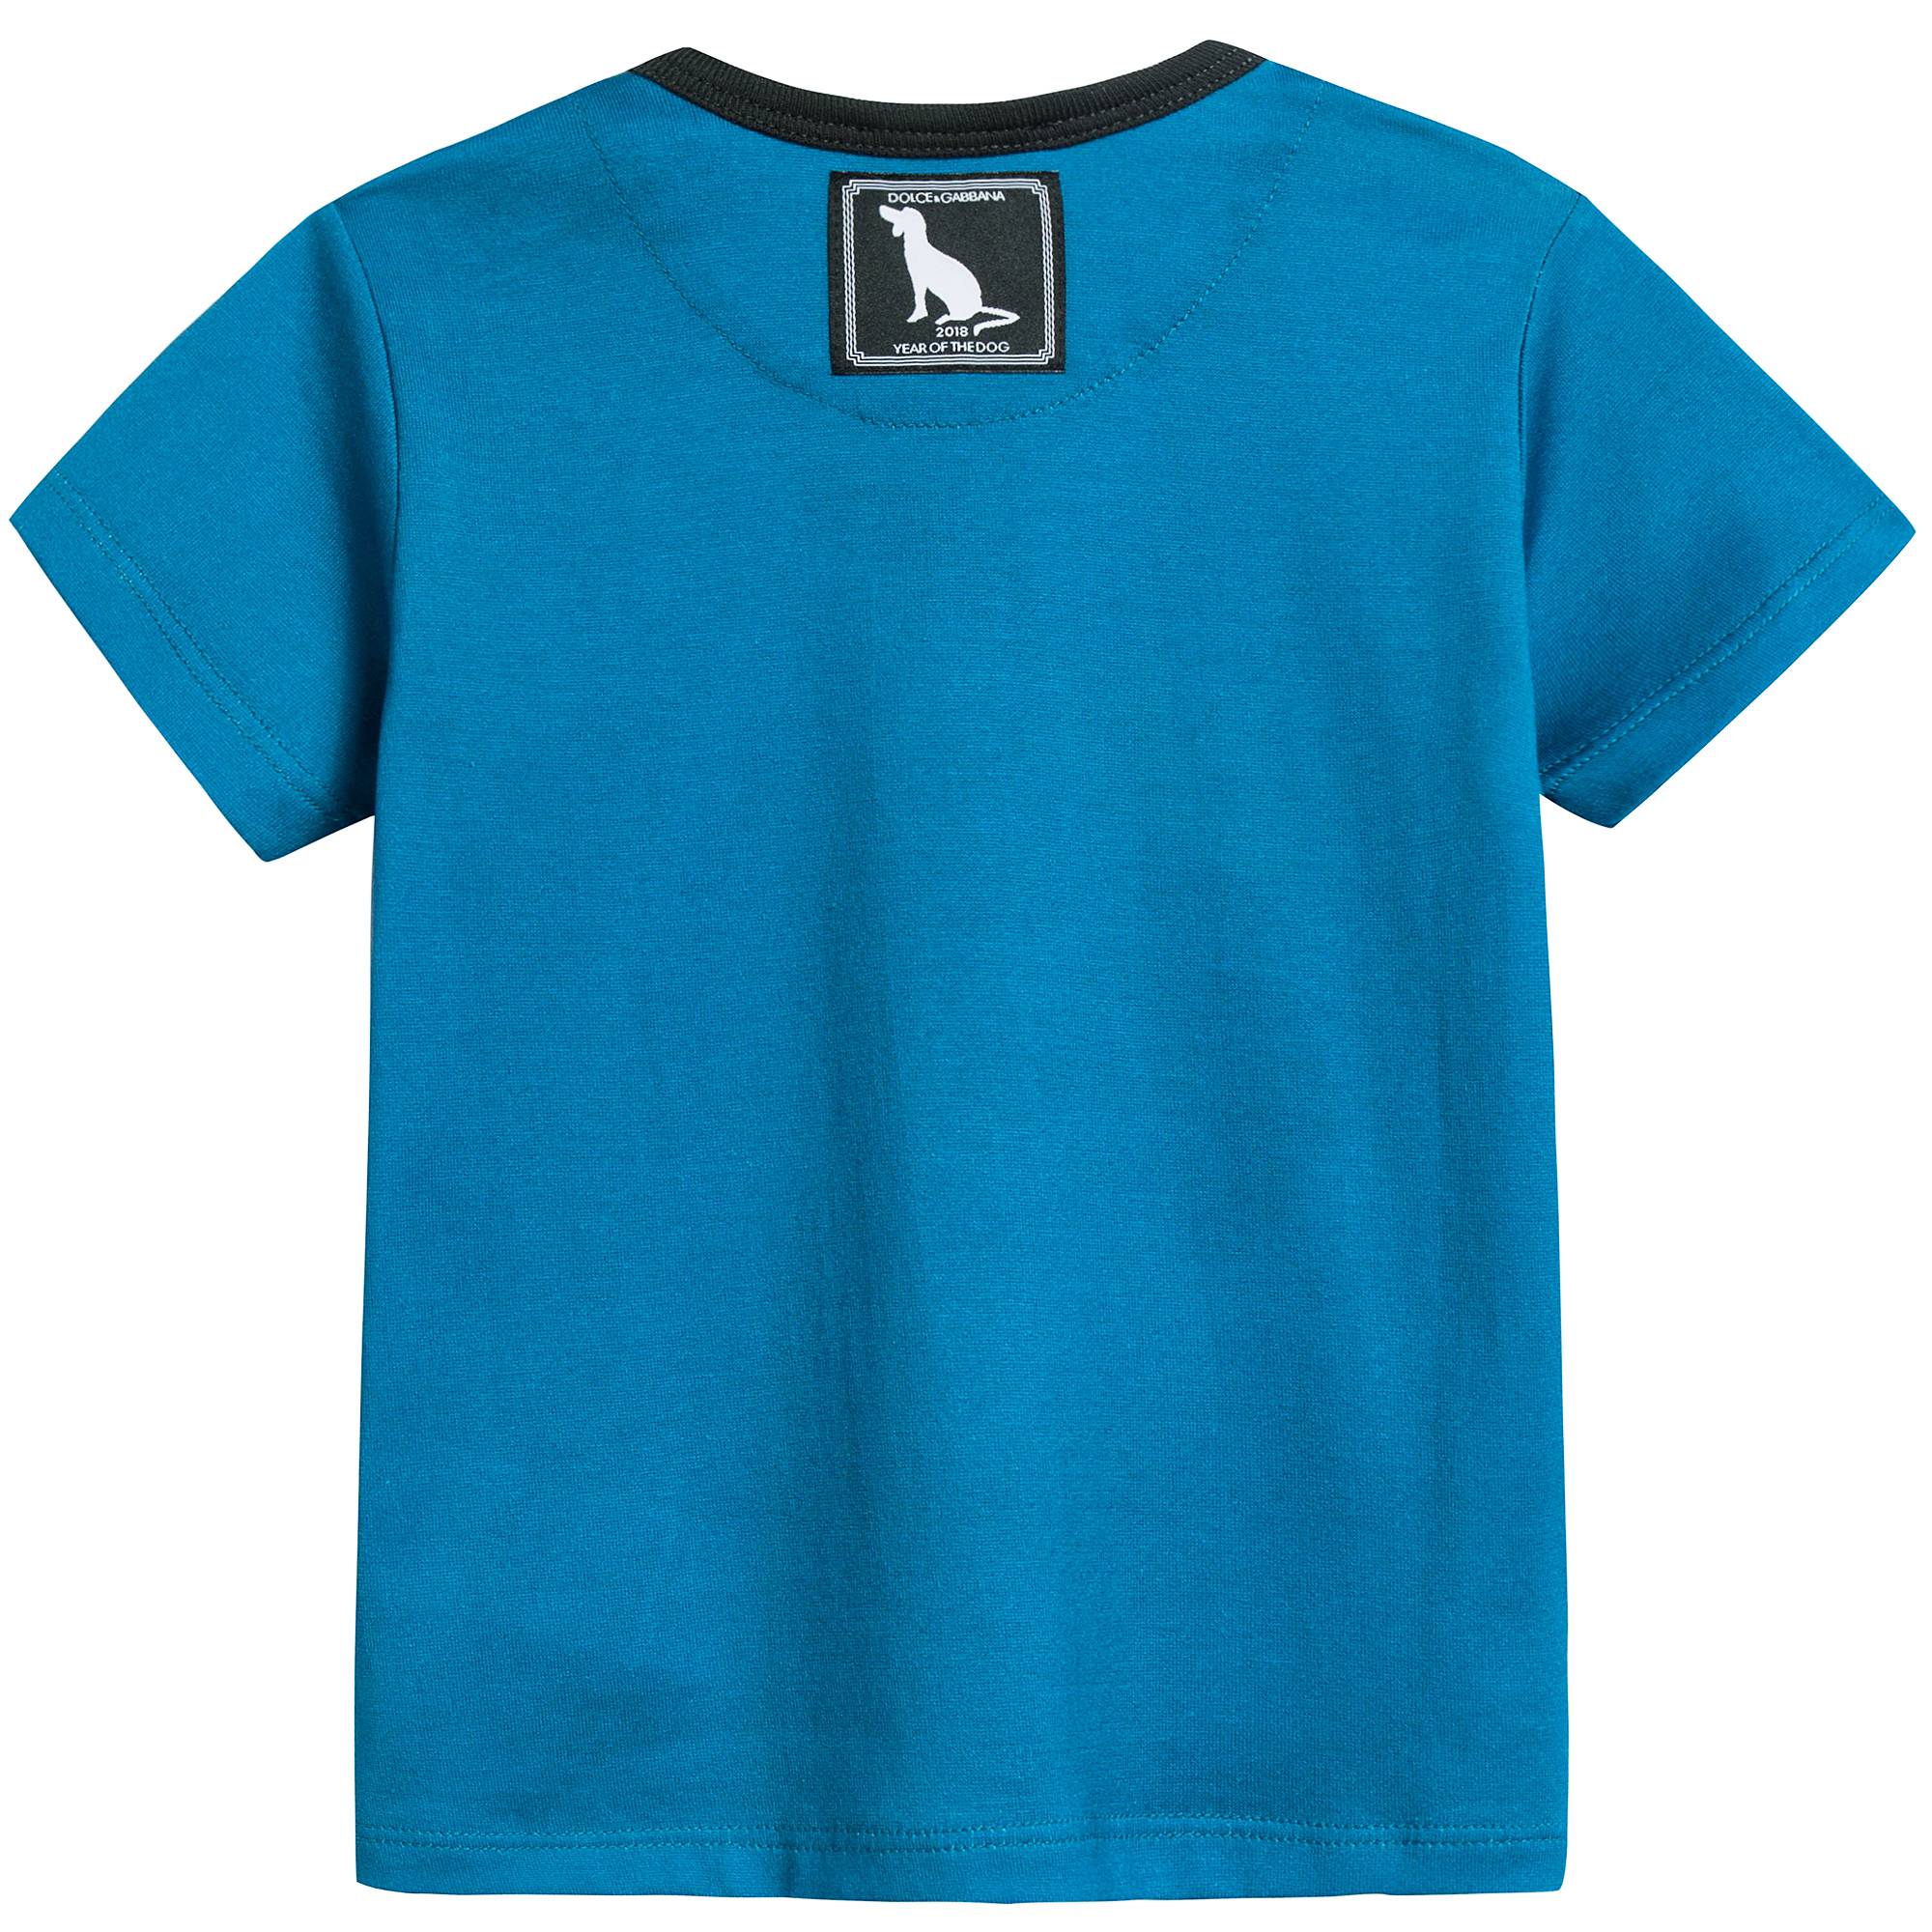 Baby Boys Blue "Dog" Cotton T-shirt